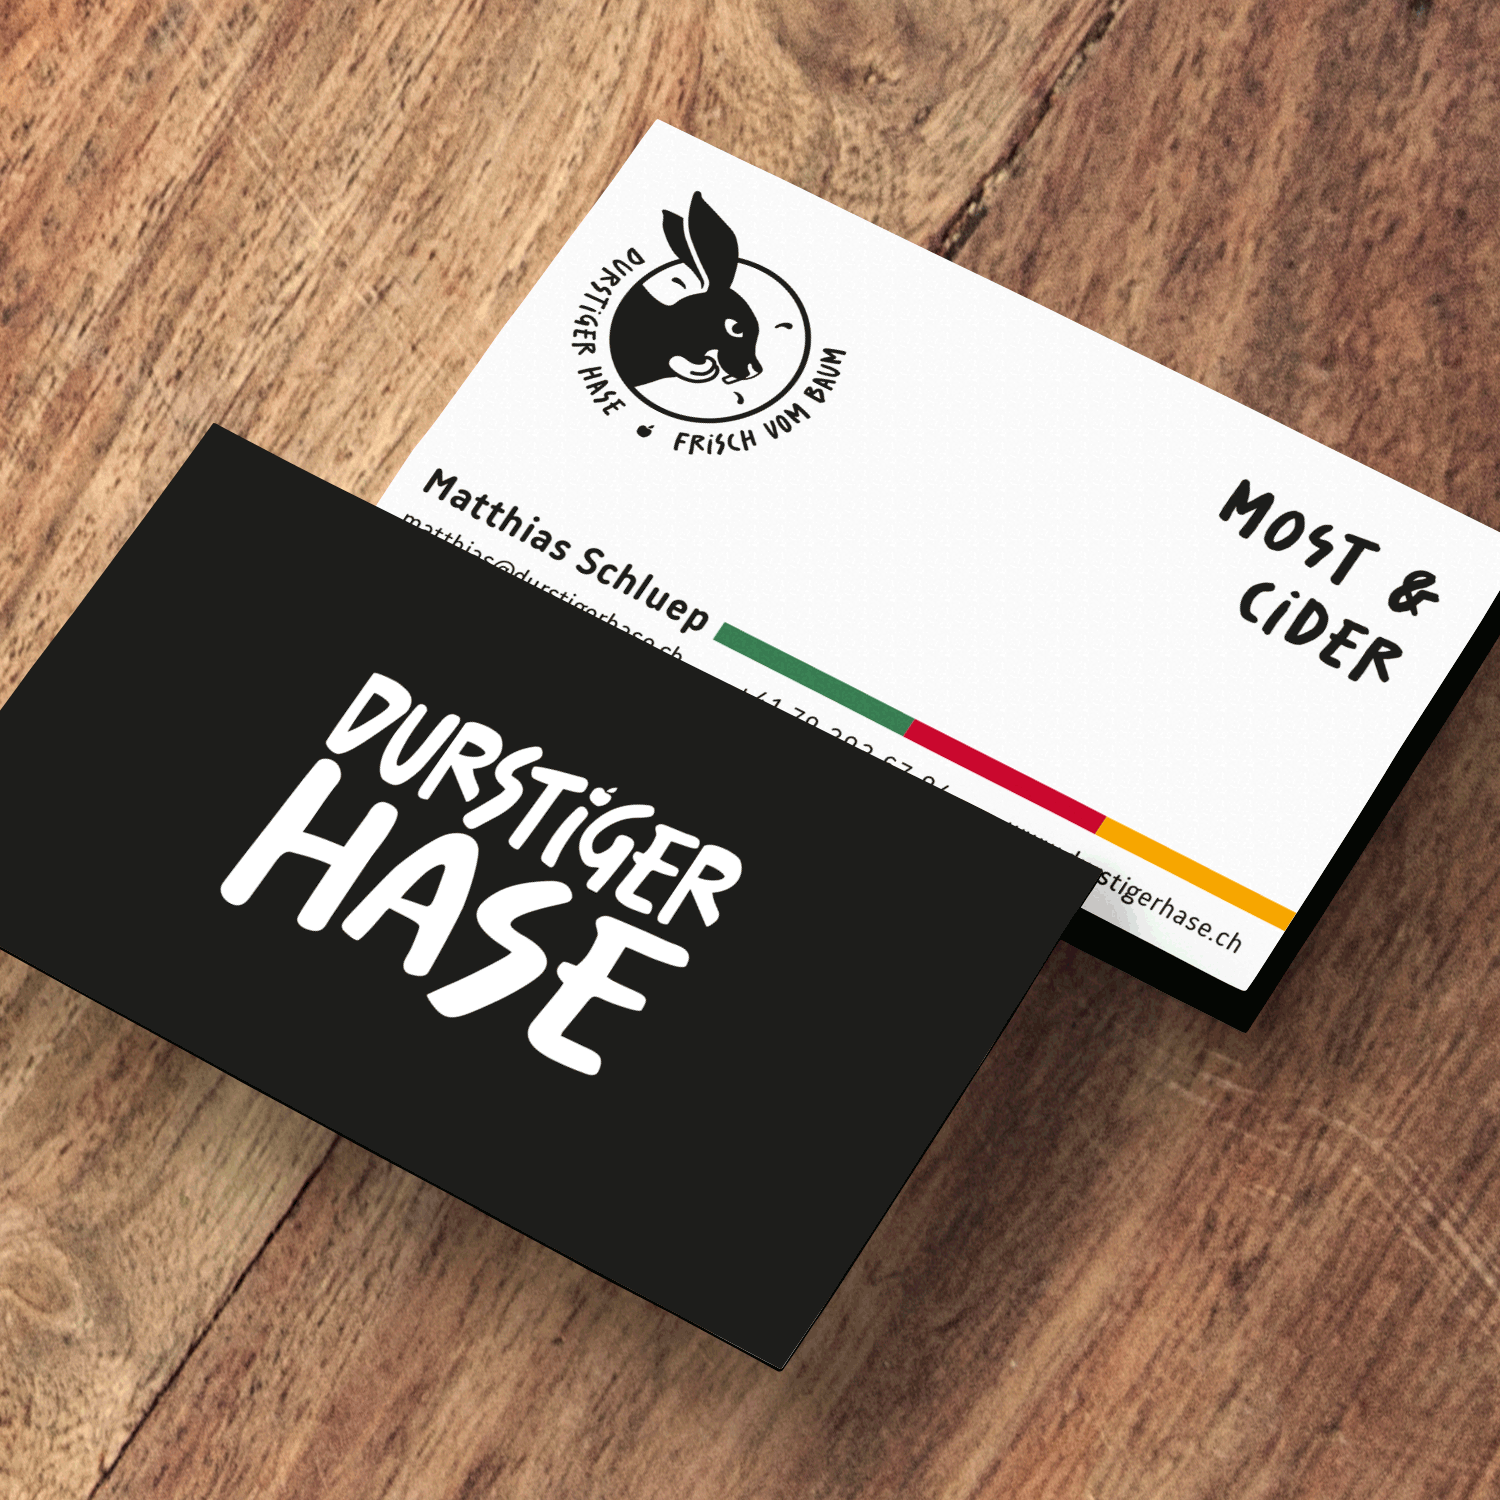 Durstiger-Hase-GPU-Design-business-cards